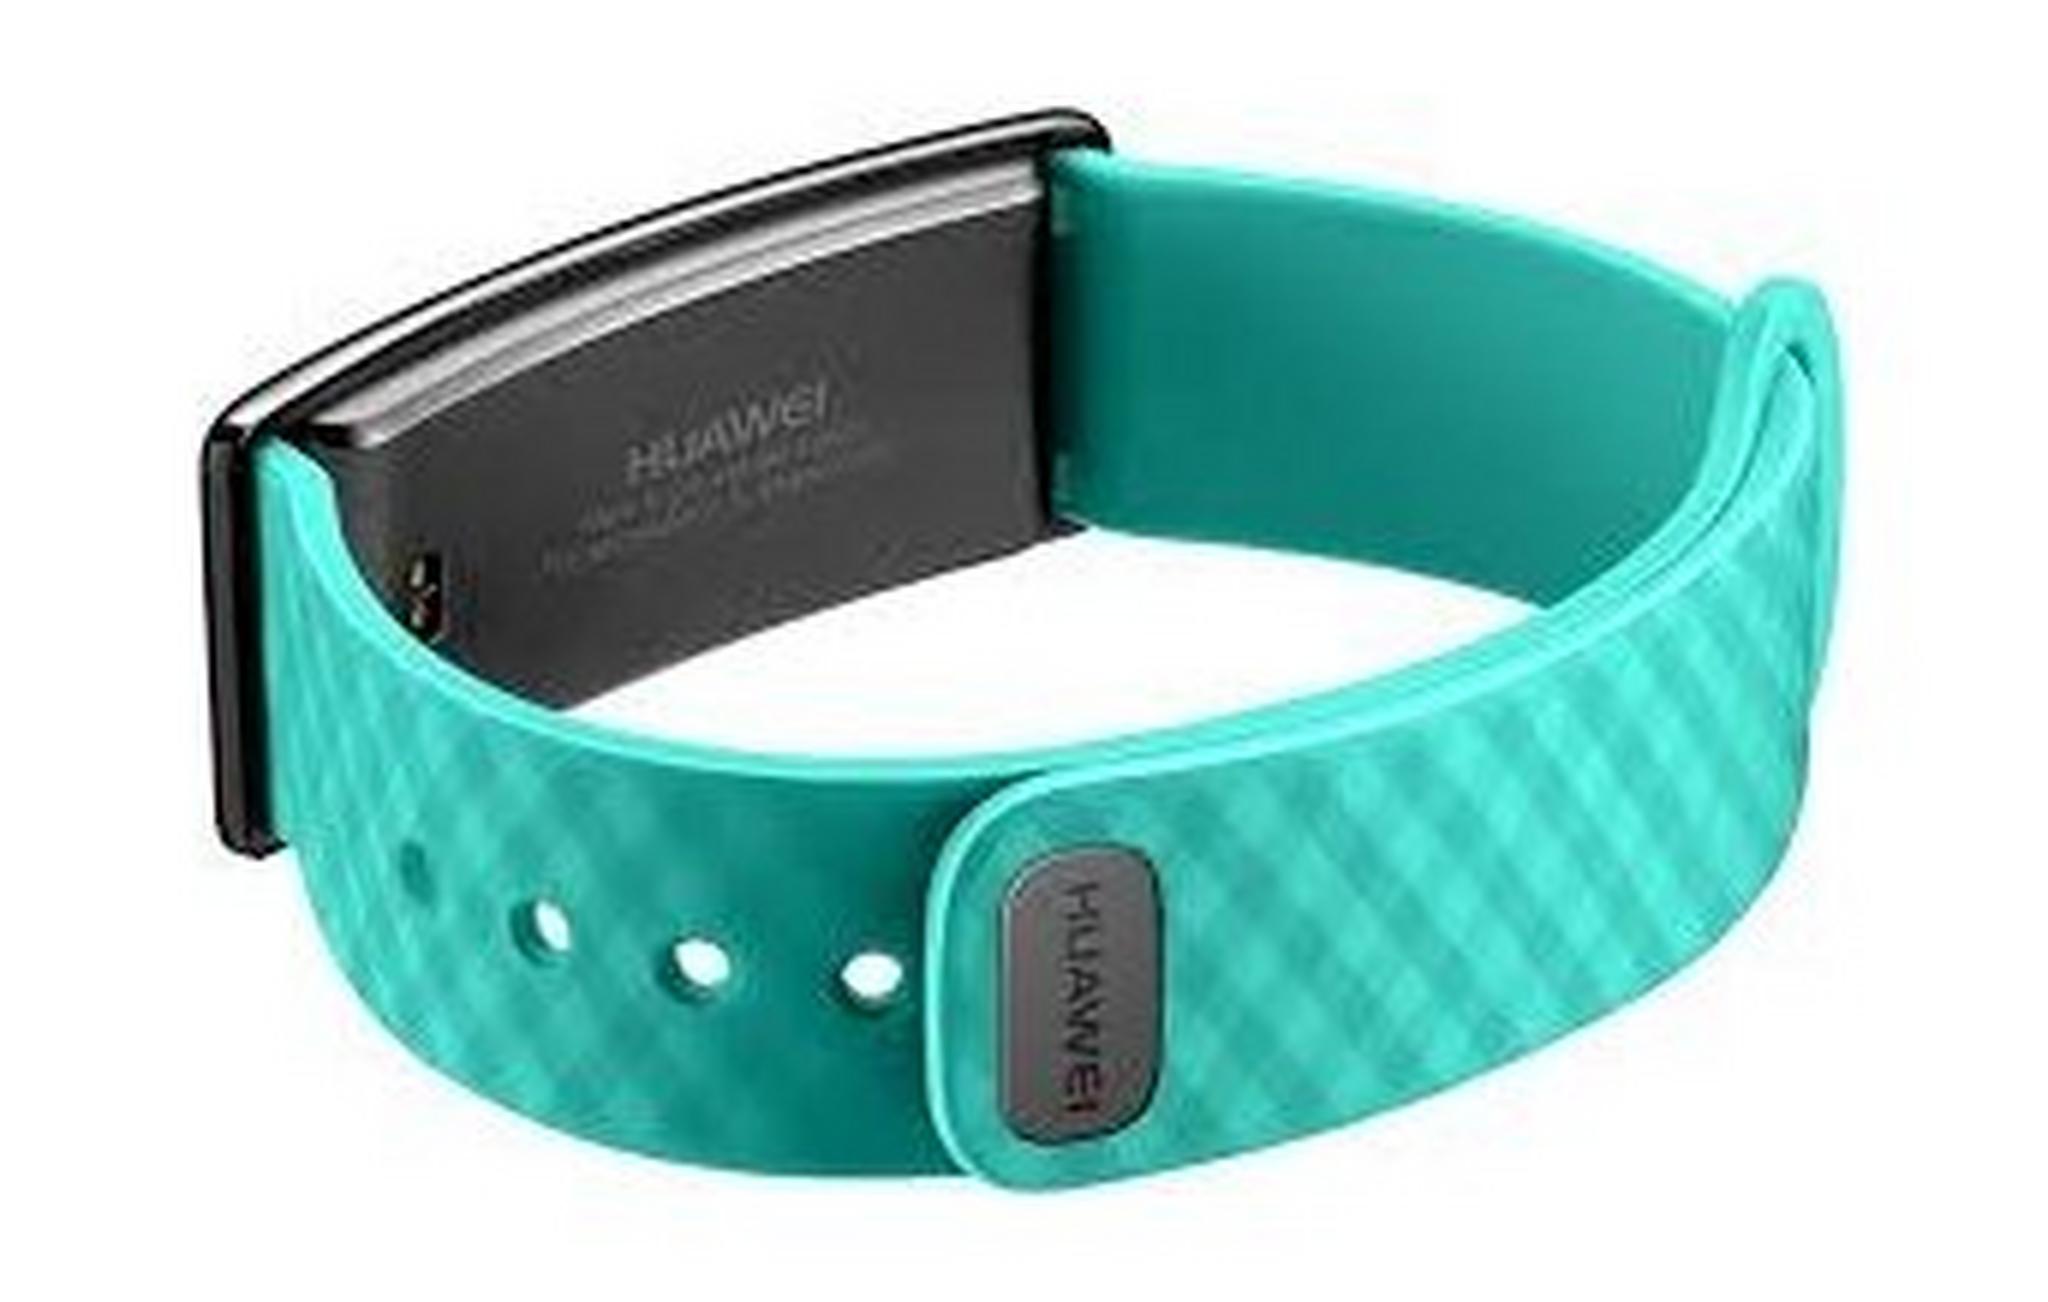 Huawei Color Band A1 Smart Fitness Tracker Wristband - Light Blue